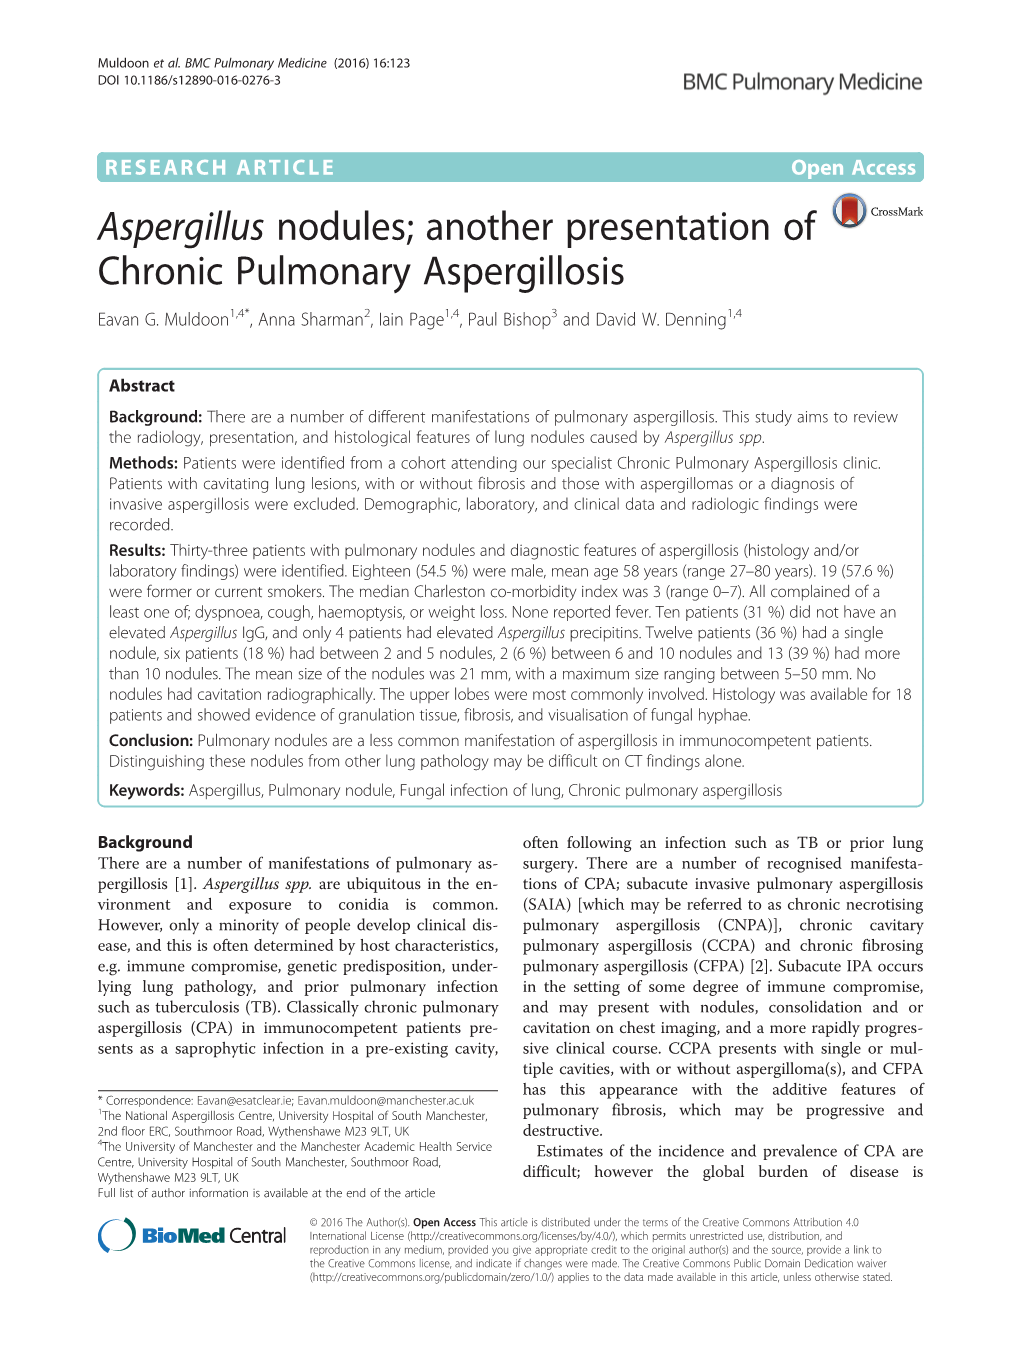 Aspergillus Nodules; Another Presentation of Chronic Pulmonary Aspergillosis Eavan G